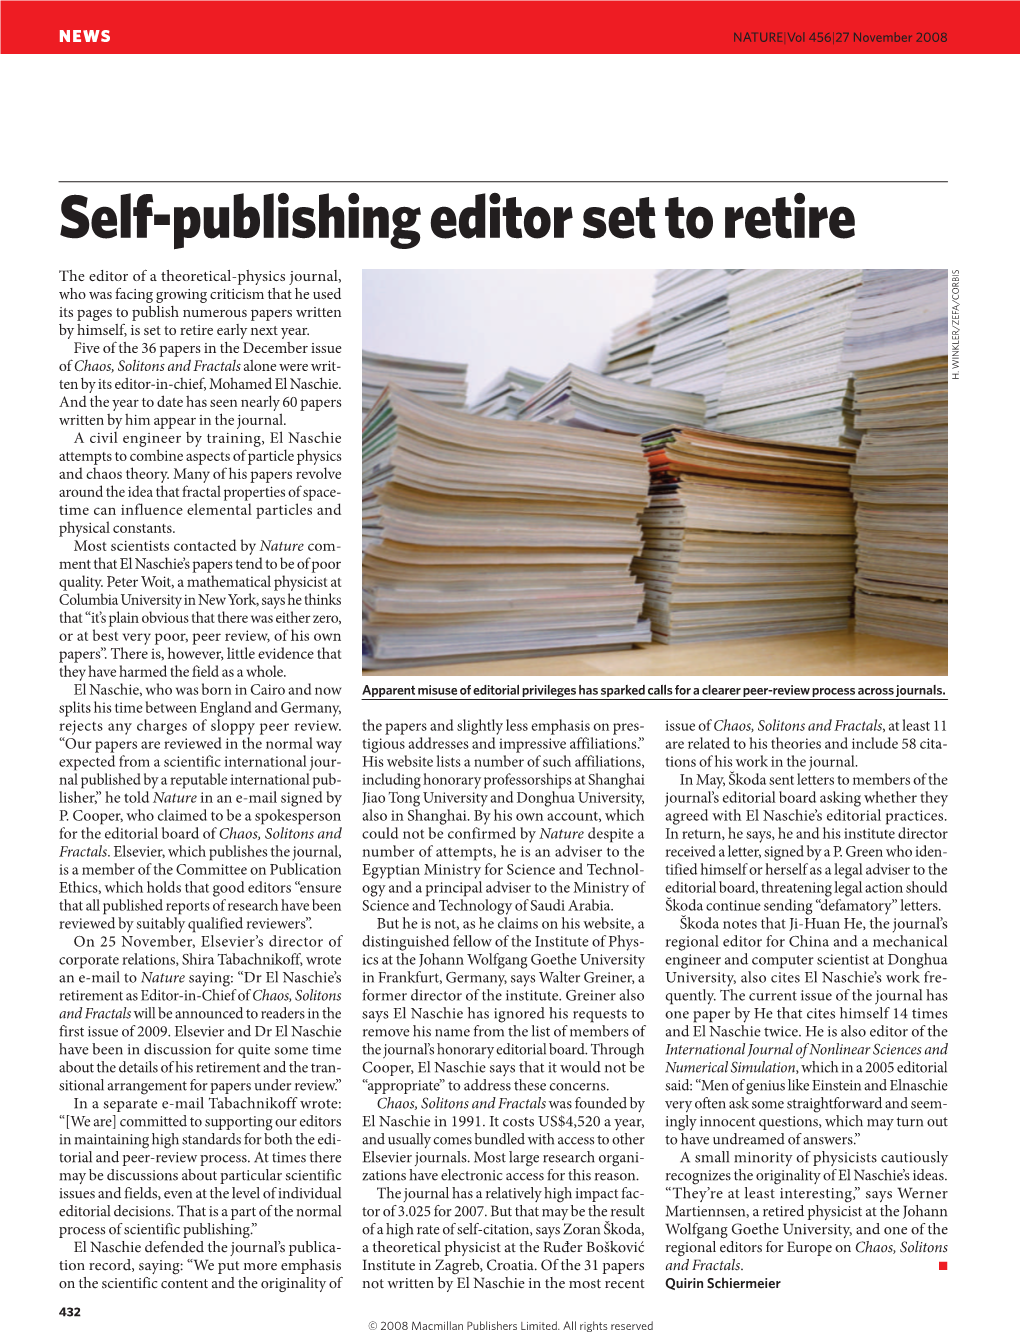 Self-Publishing Editor Set to Retire